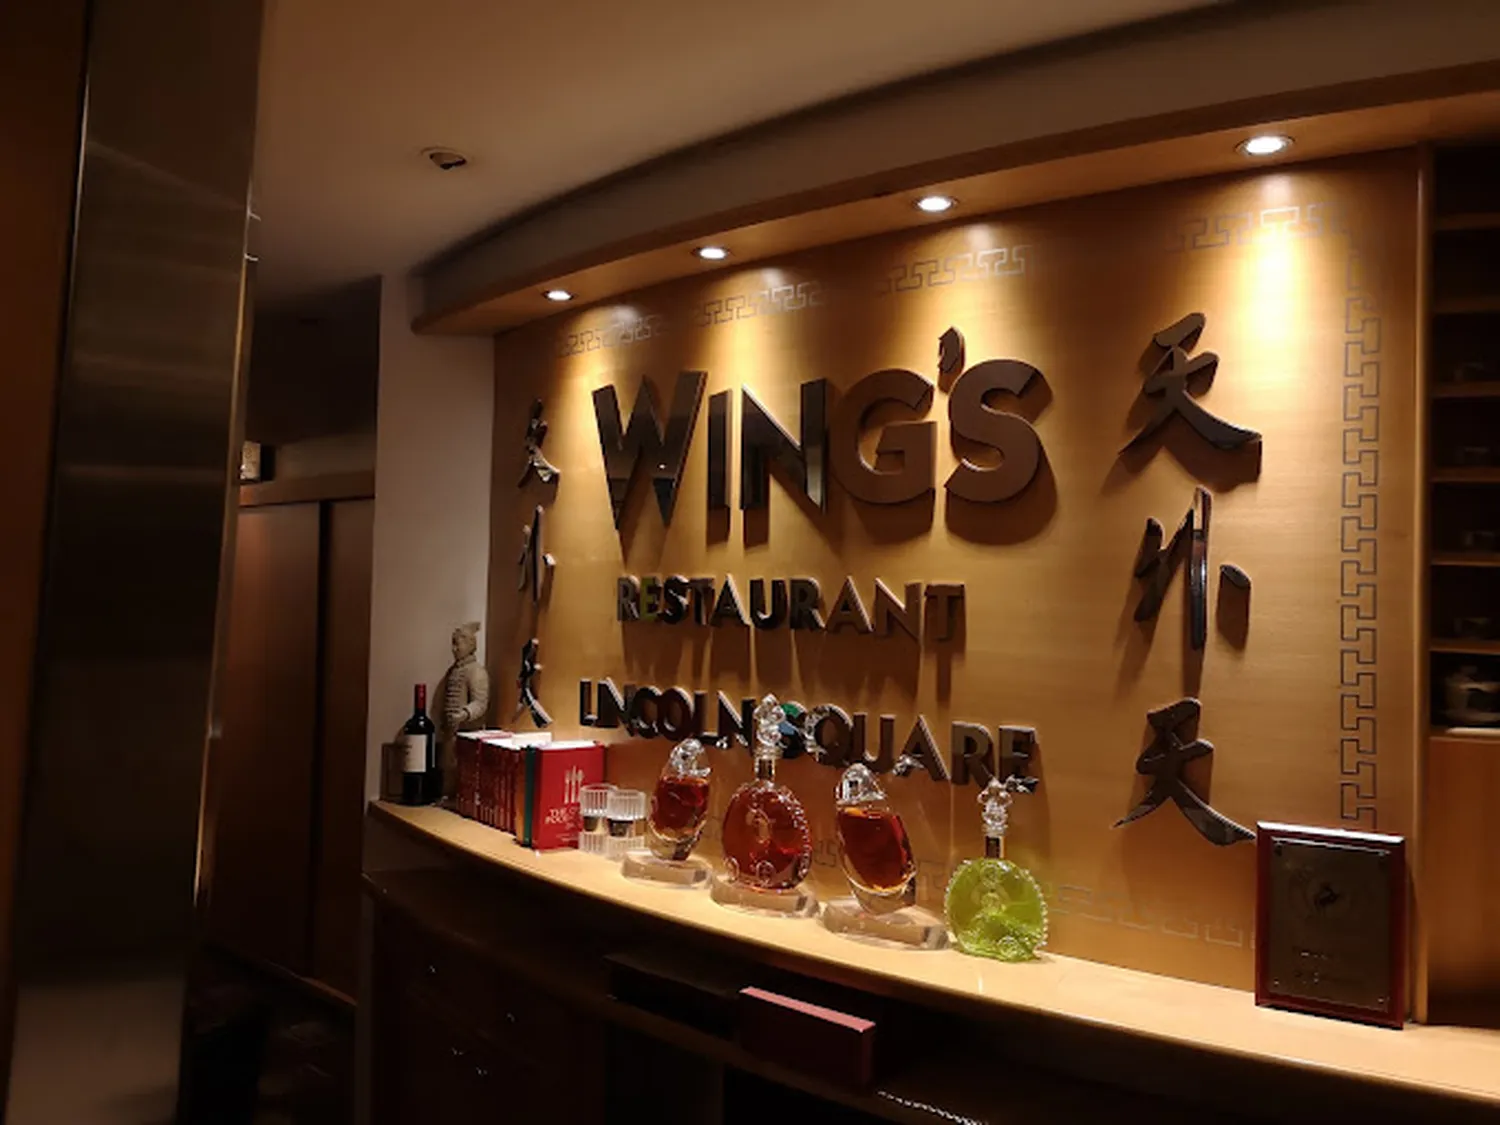 Wing's restaurant Manchester